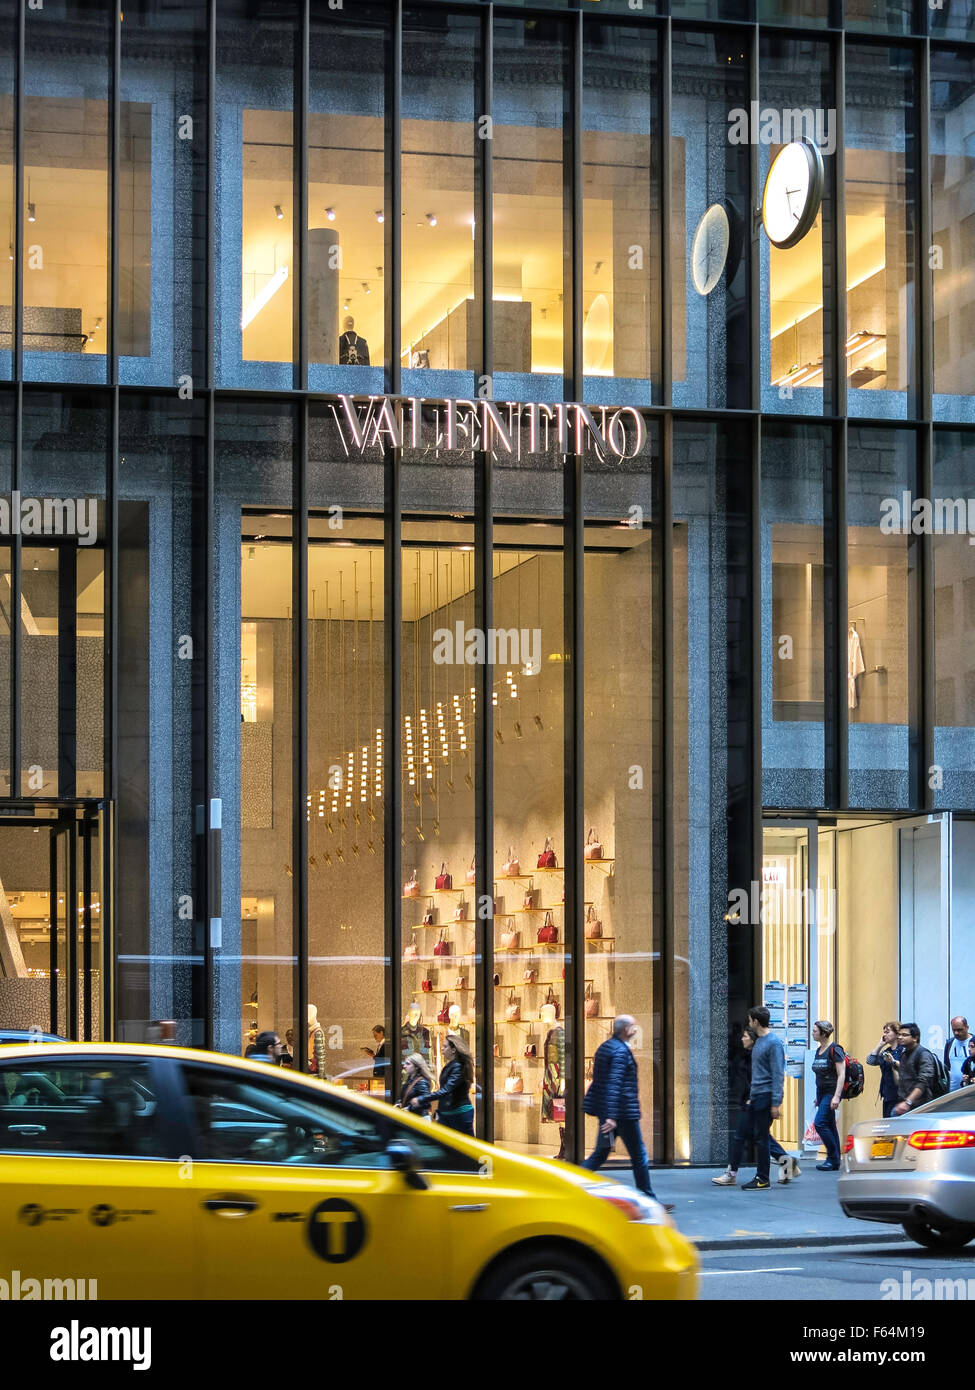 Valentino Store Façade Entrée avant la Cinquième Avenue, New York, USA Banque D'Images